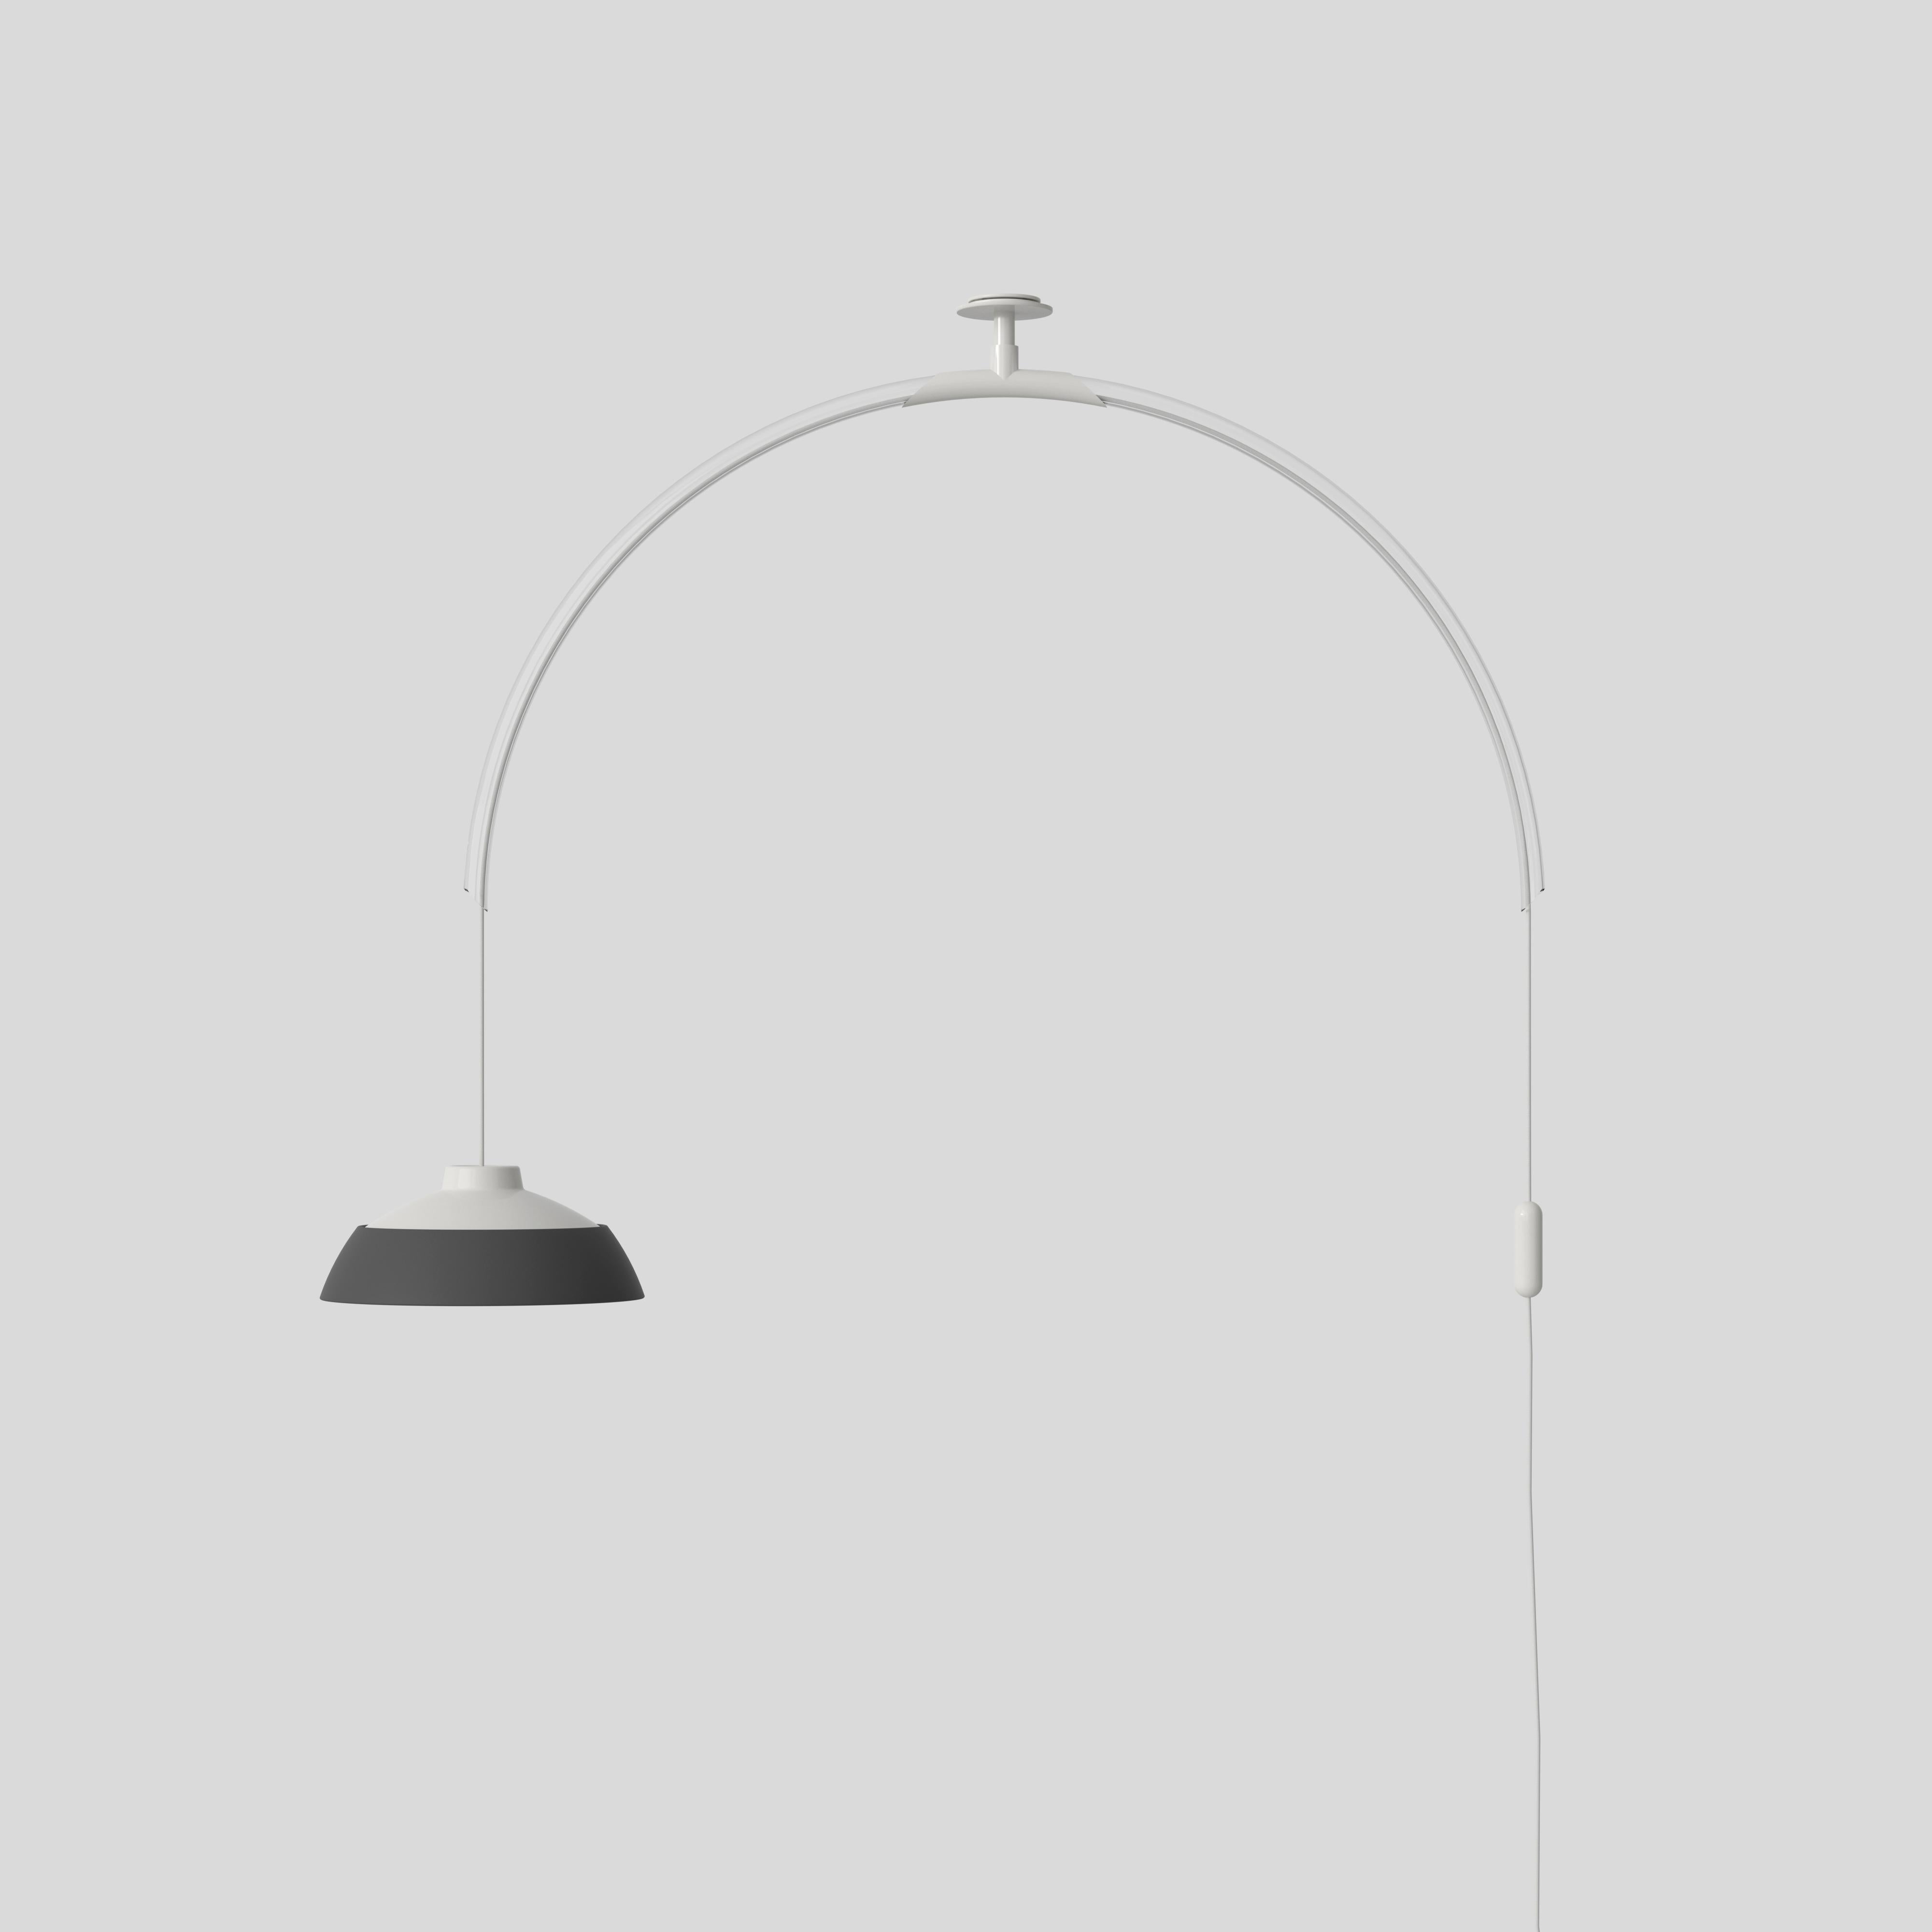 Aluminum Gino Sarfatti Lamp Model 2129 by Astep